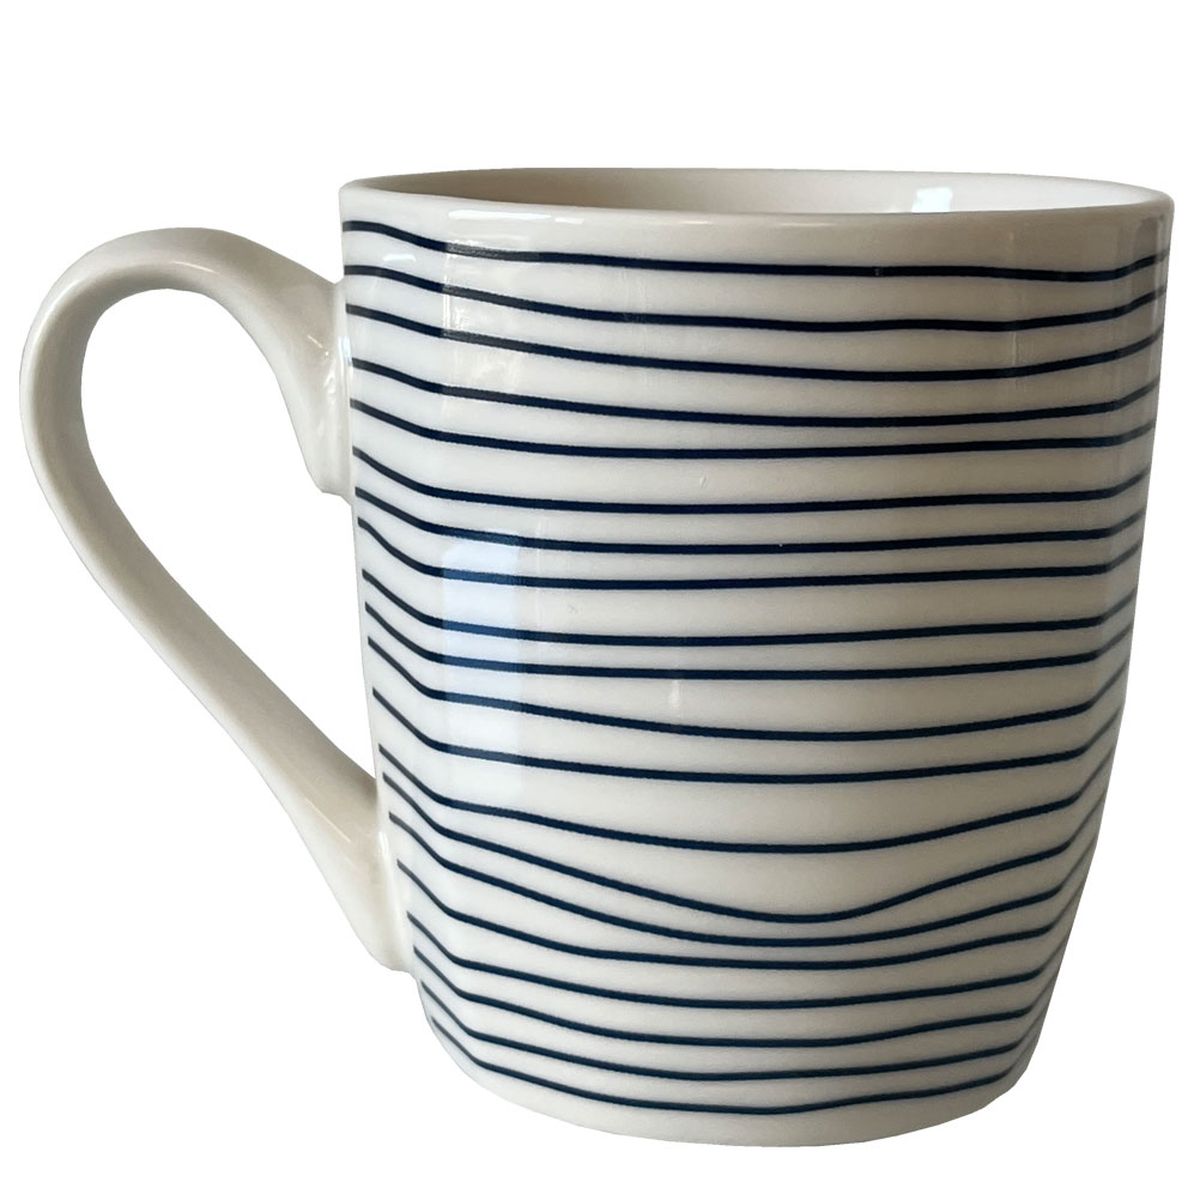 White ceramic striped cat mug in gift box